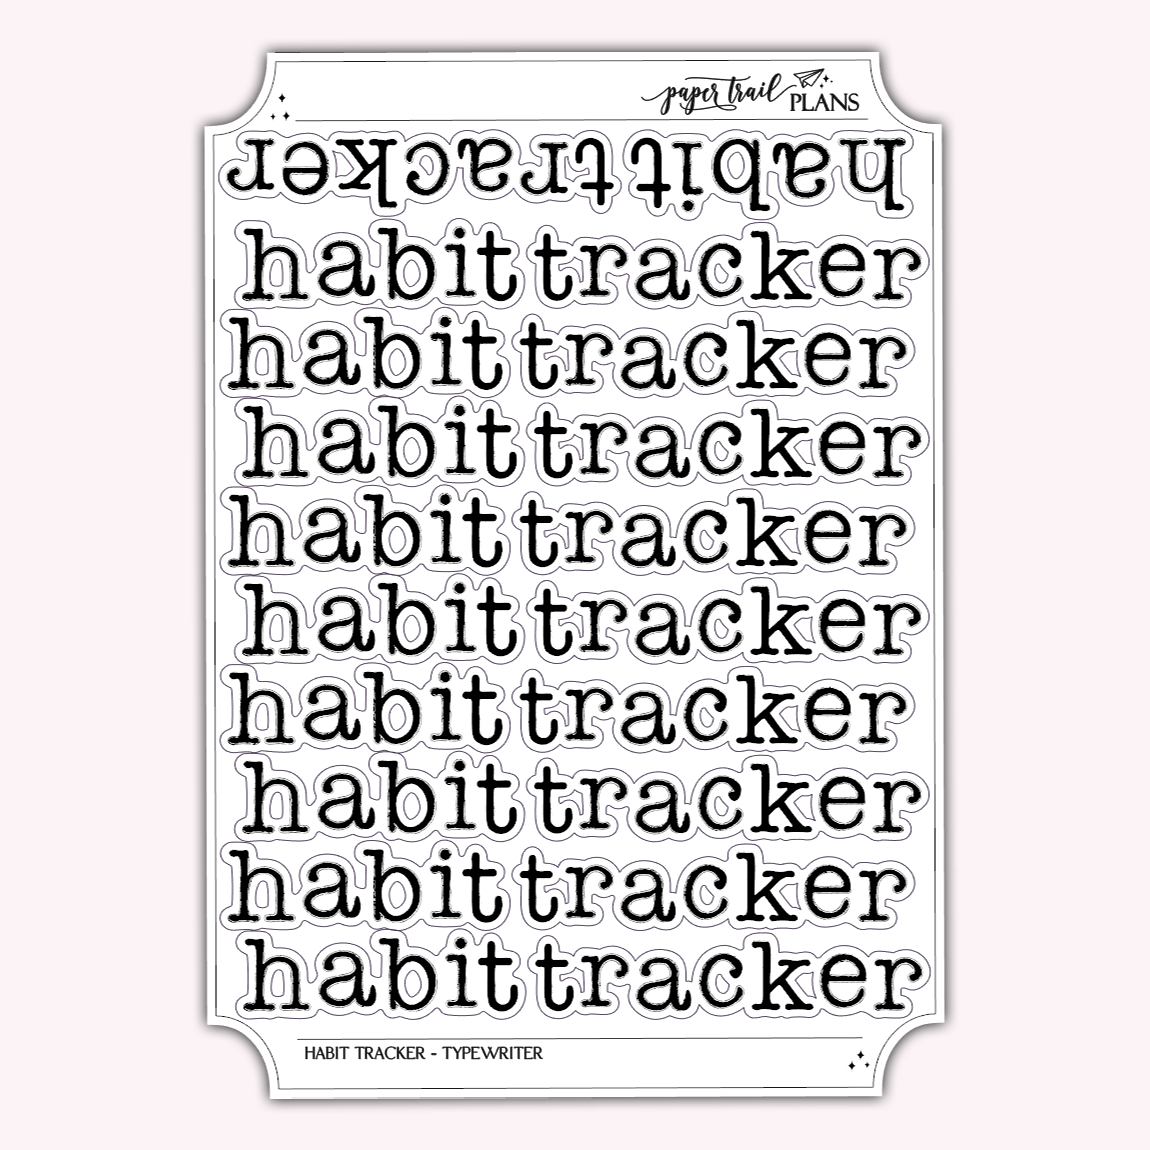 Habit Tracker - Typewriter